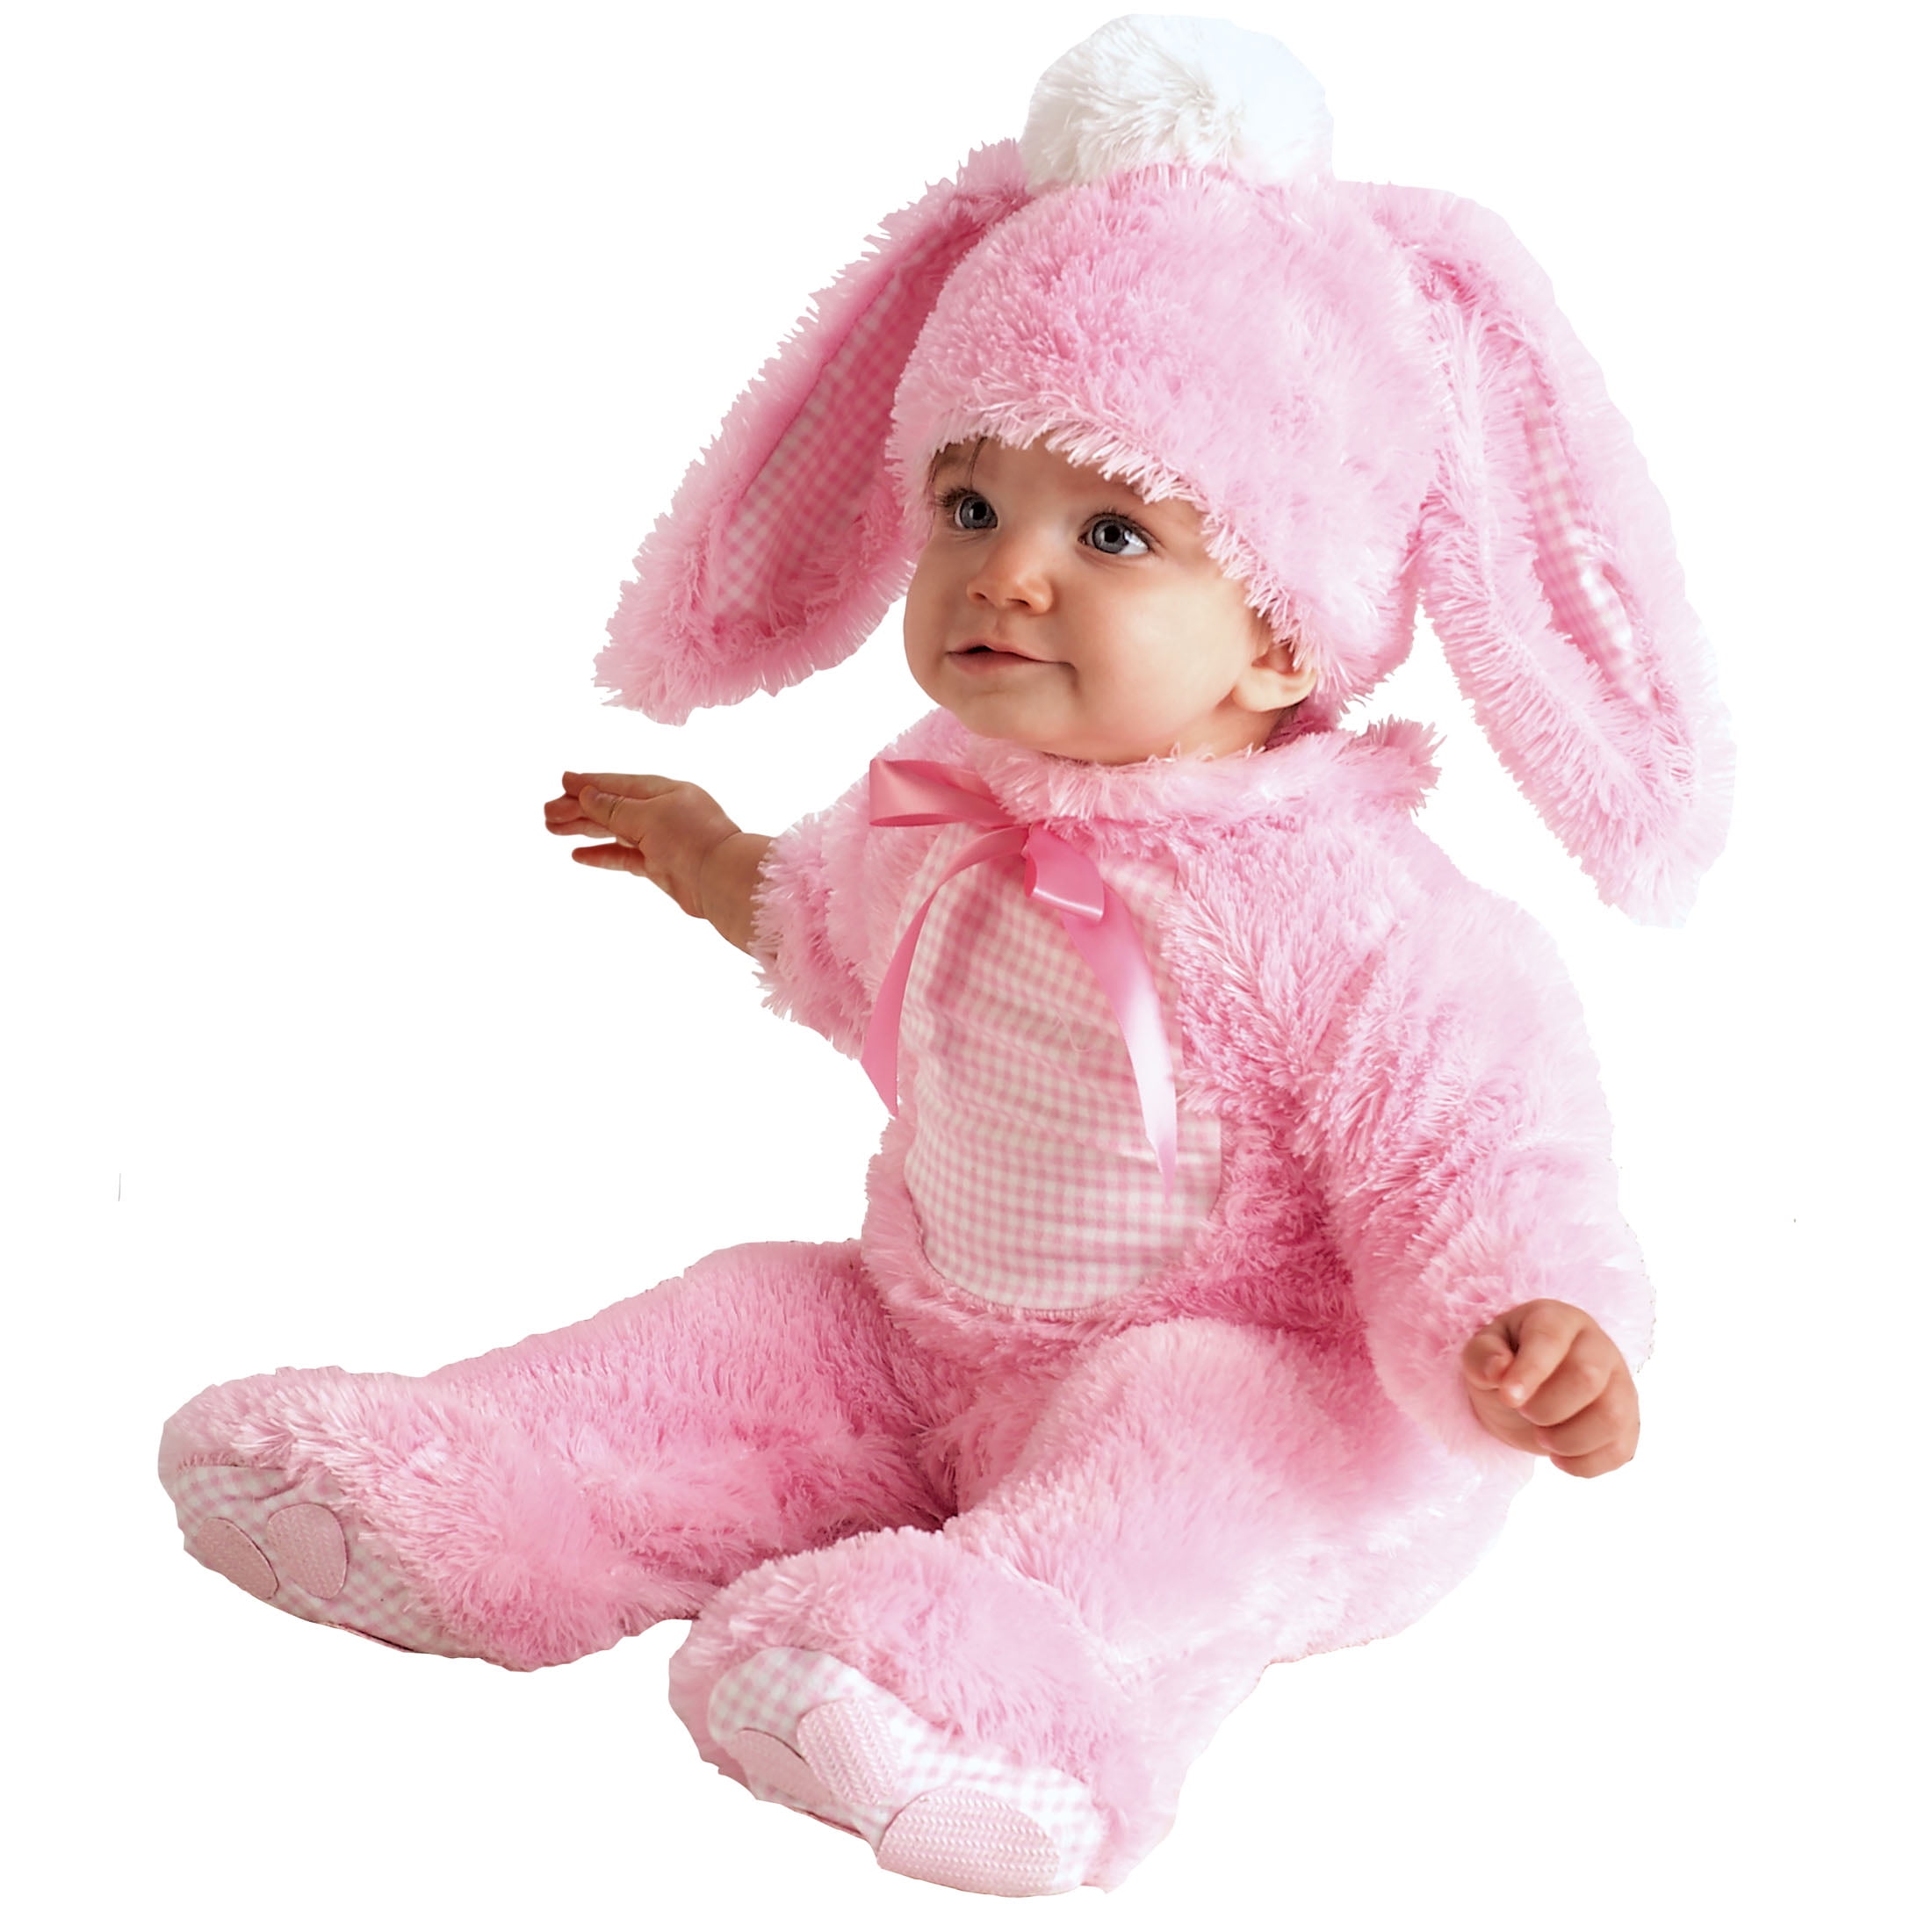 Pink Bunny Infant Halloween Costume 0-6M by Rubies II - Walmart.com